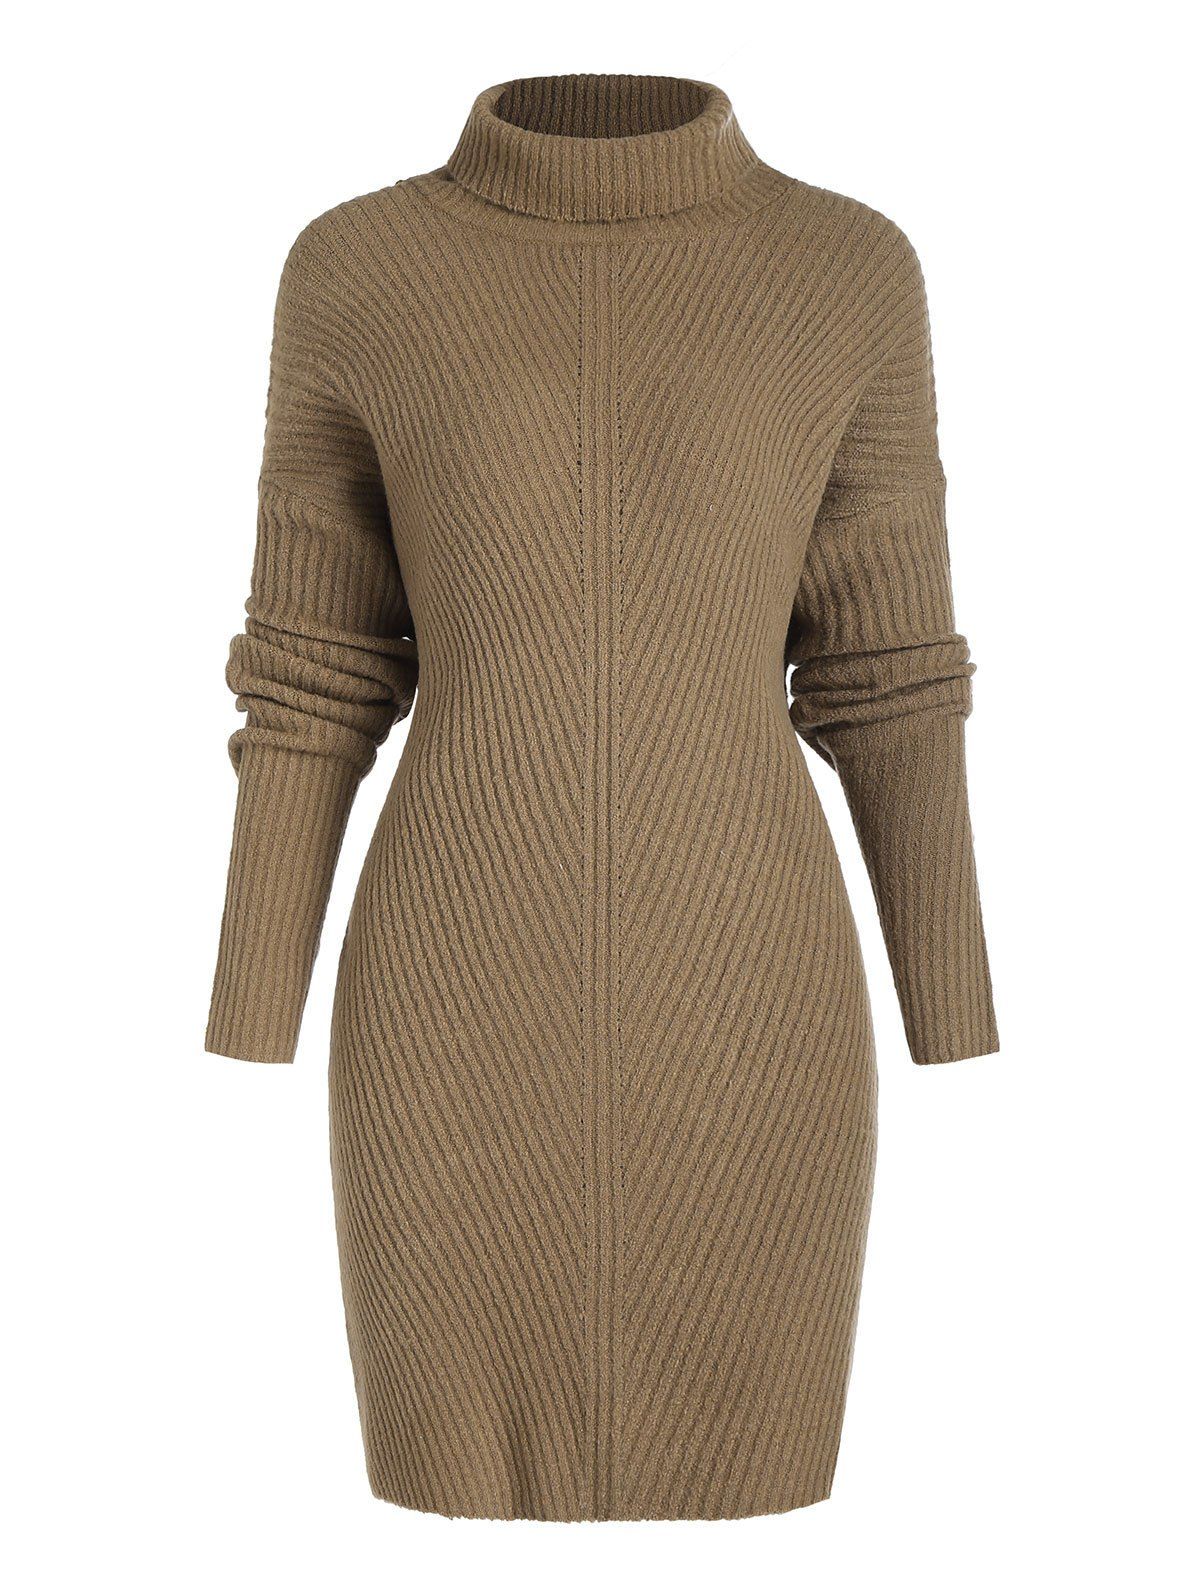 Drop Shoulder Turtleneck Ribbed Sweater Dress - LIGHT COFFEE XL